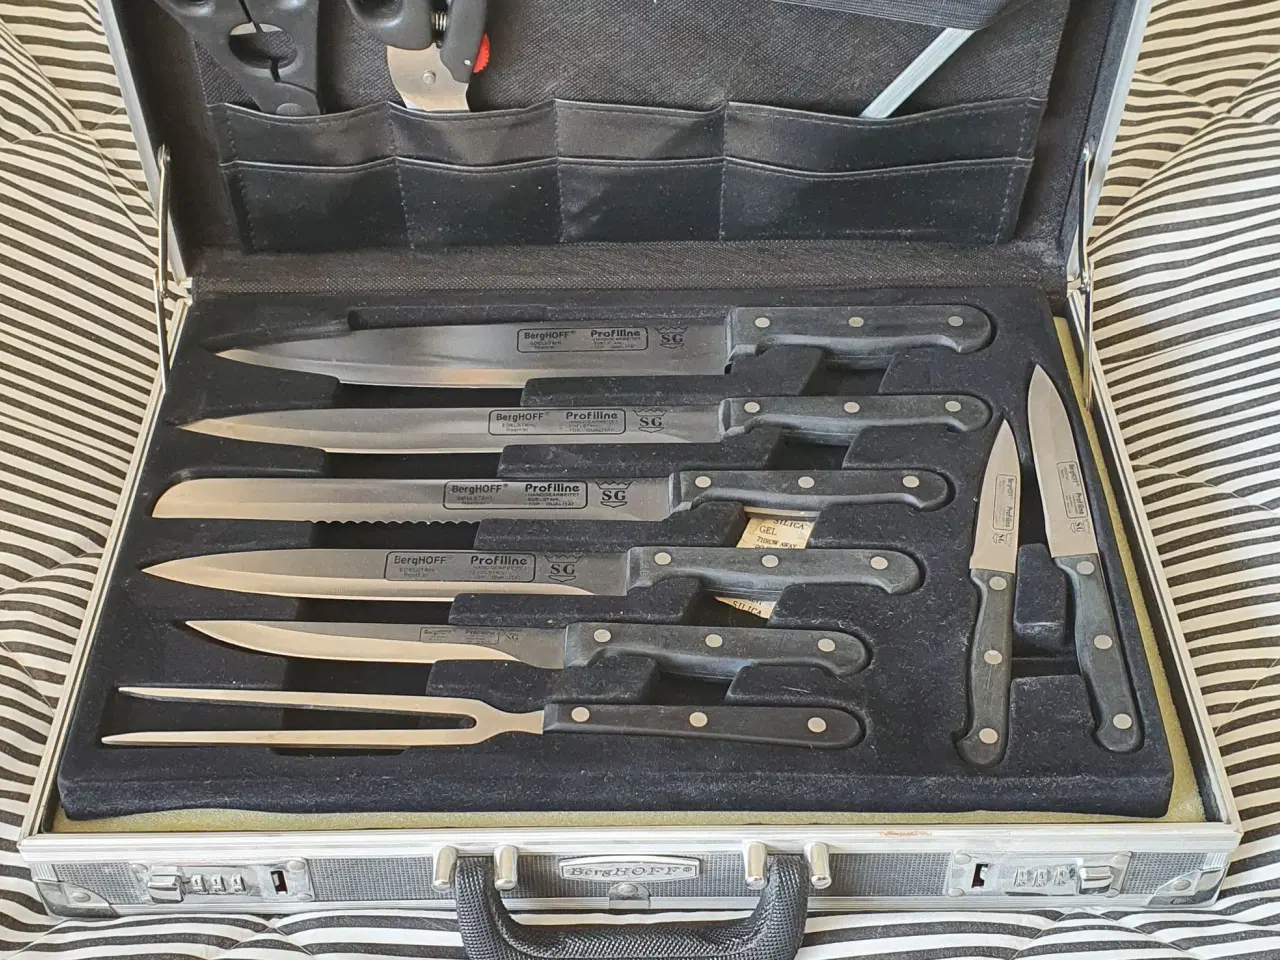 Billede 7 - Knivsæt i alu kuffert med 18 dele.